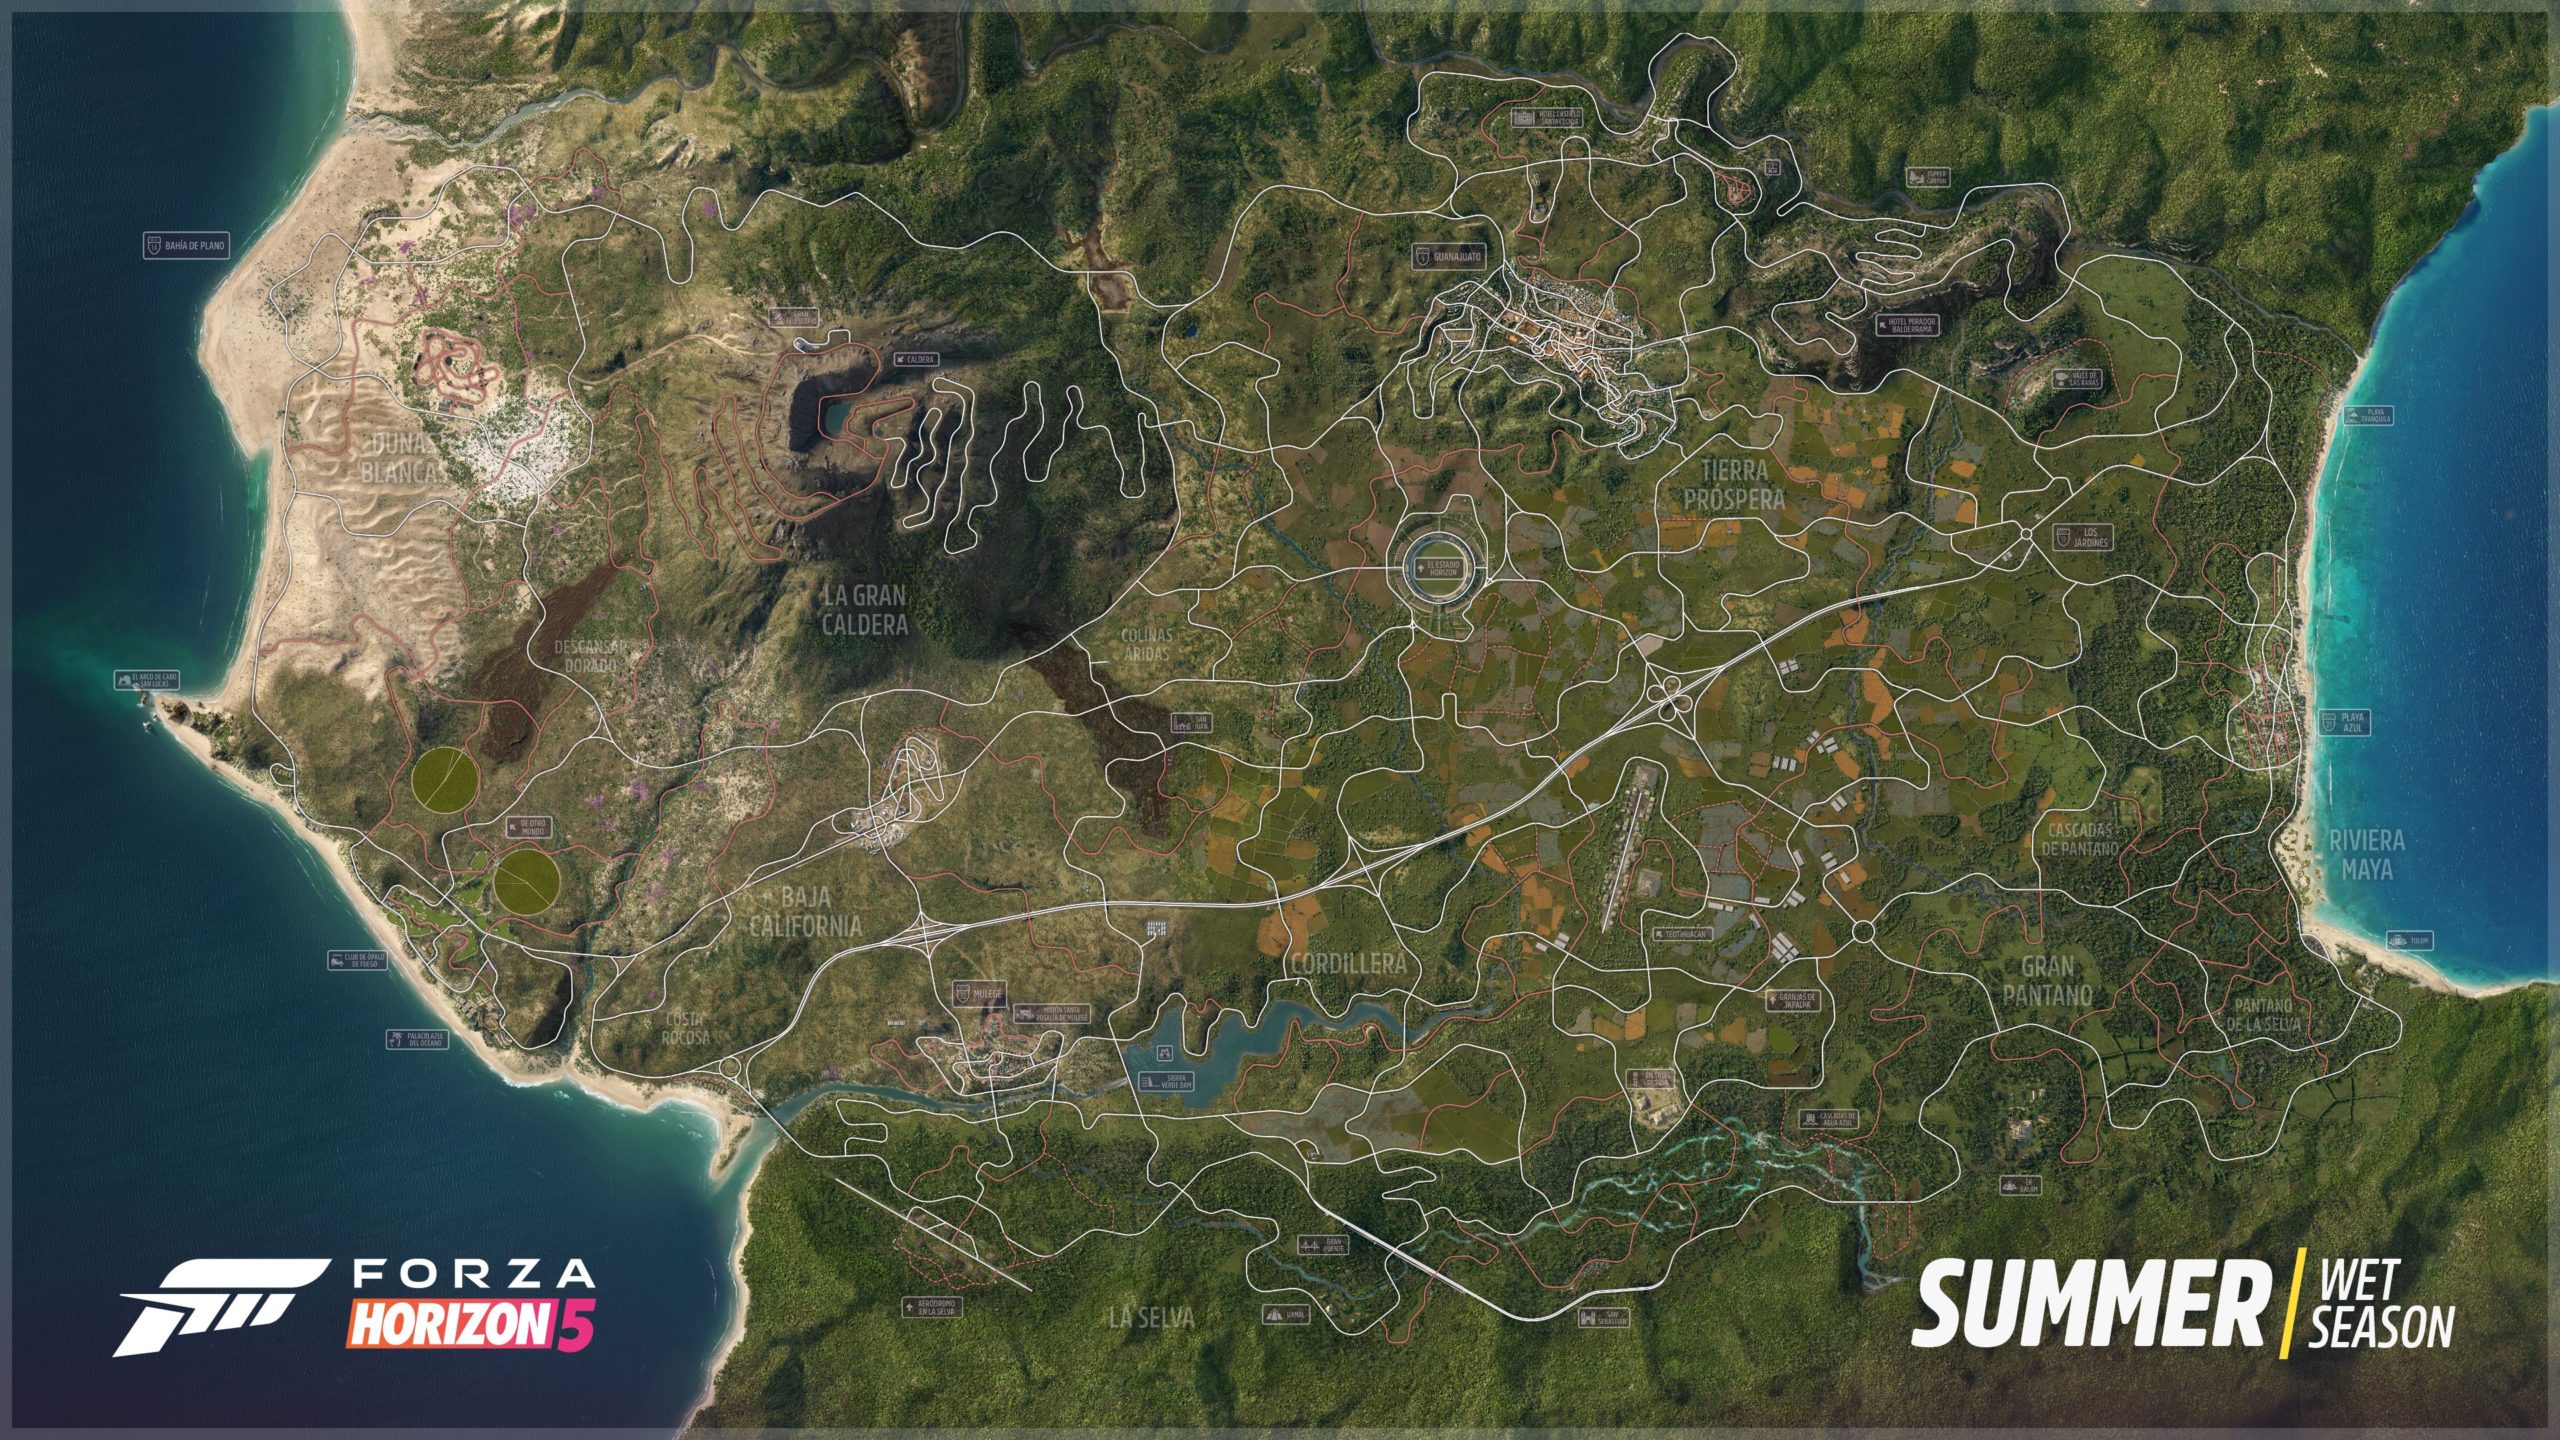 Forza Horizon 5 Developers Share Game Map Online – Gameranx